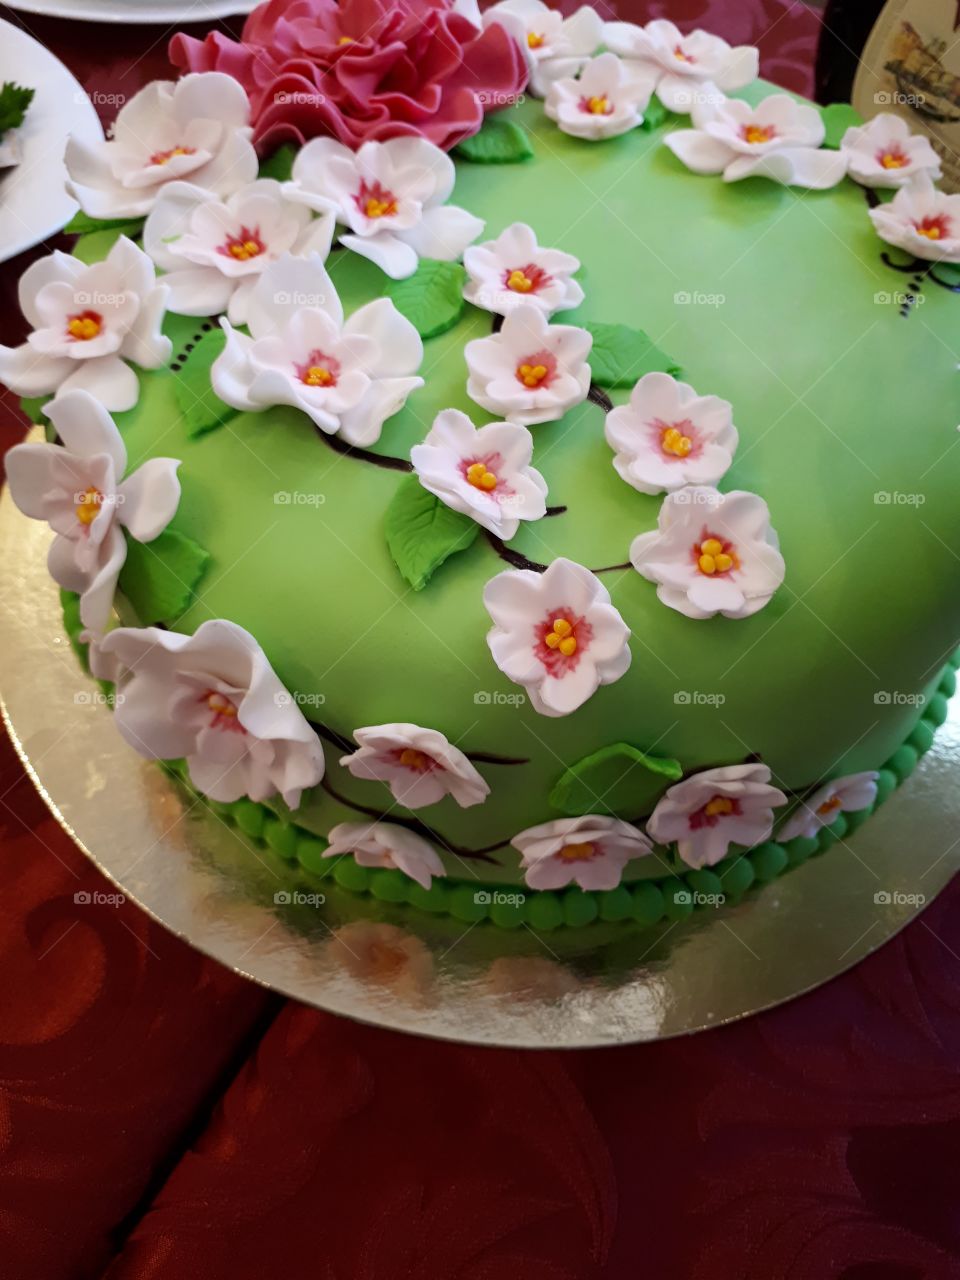 Festive cake